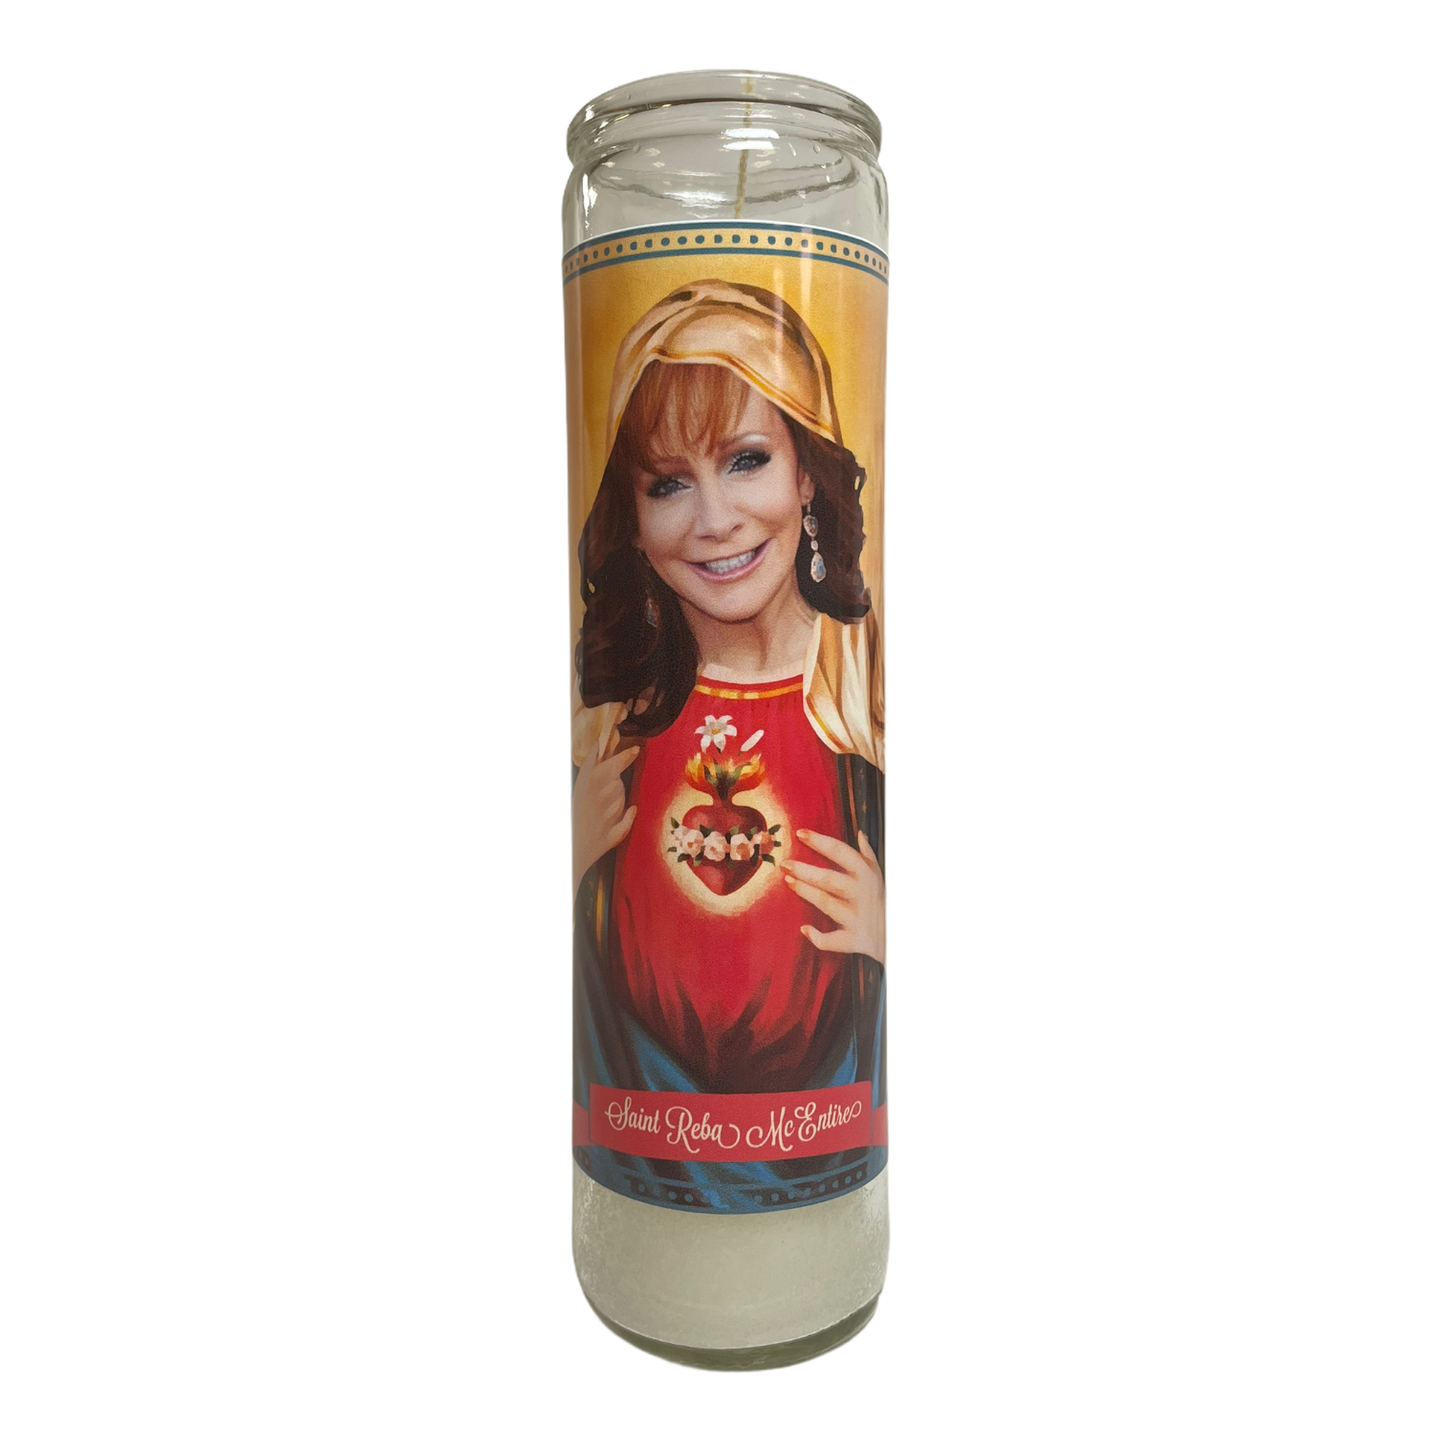 Reba McEntire Devotional Prayer Candle